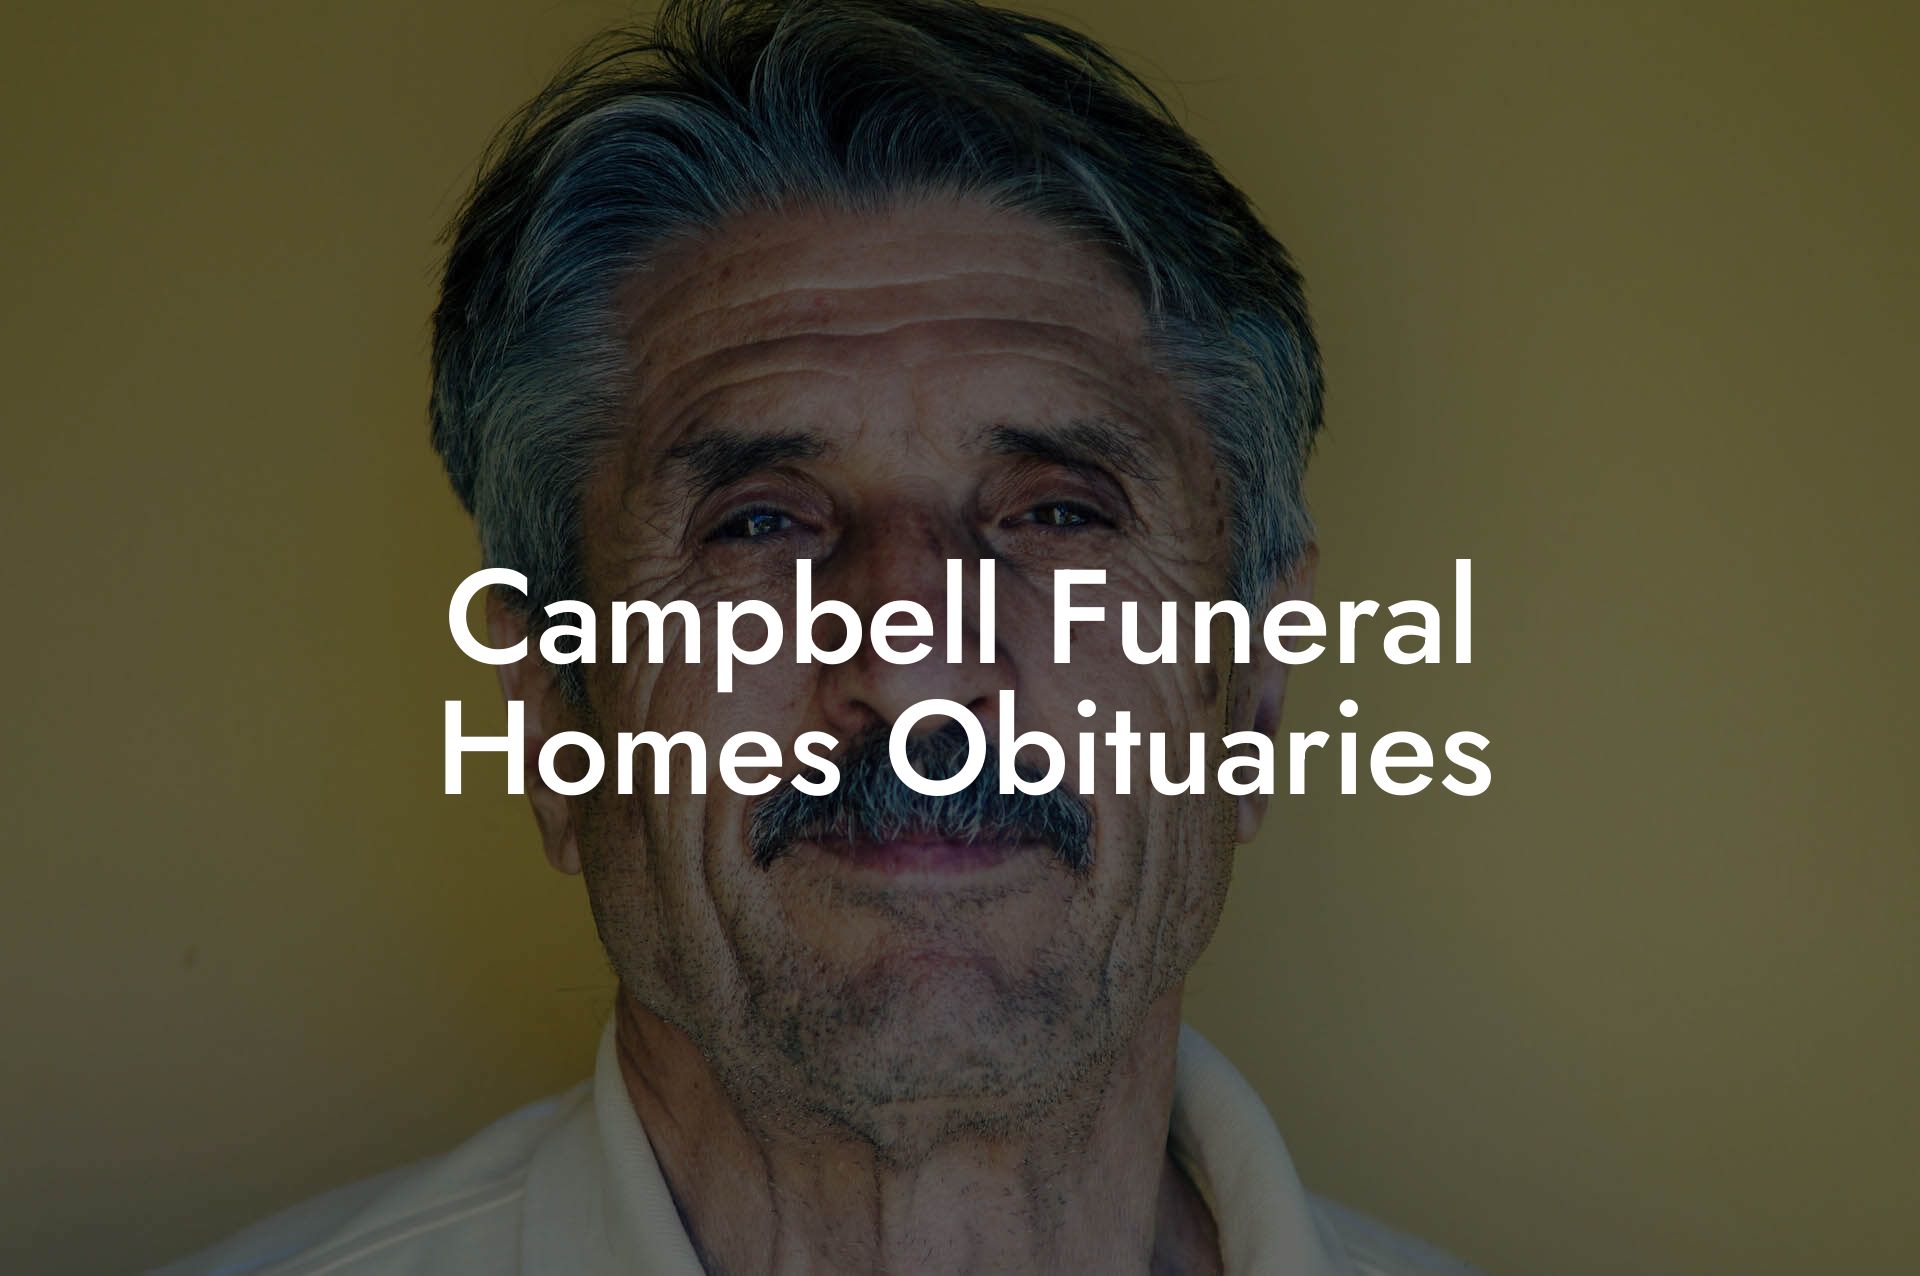 Campbell Funeral Homes Obituaries